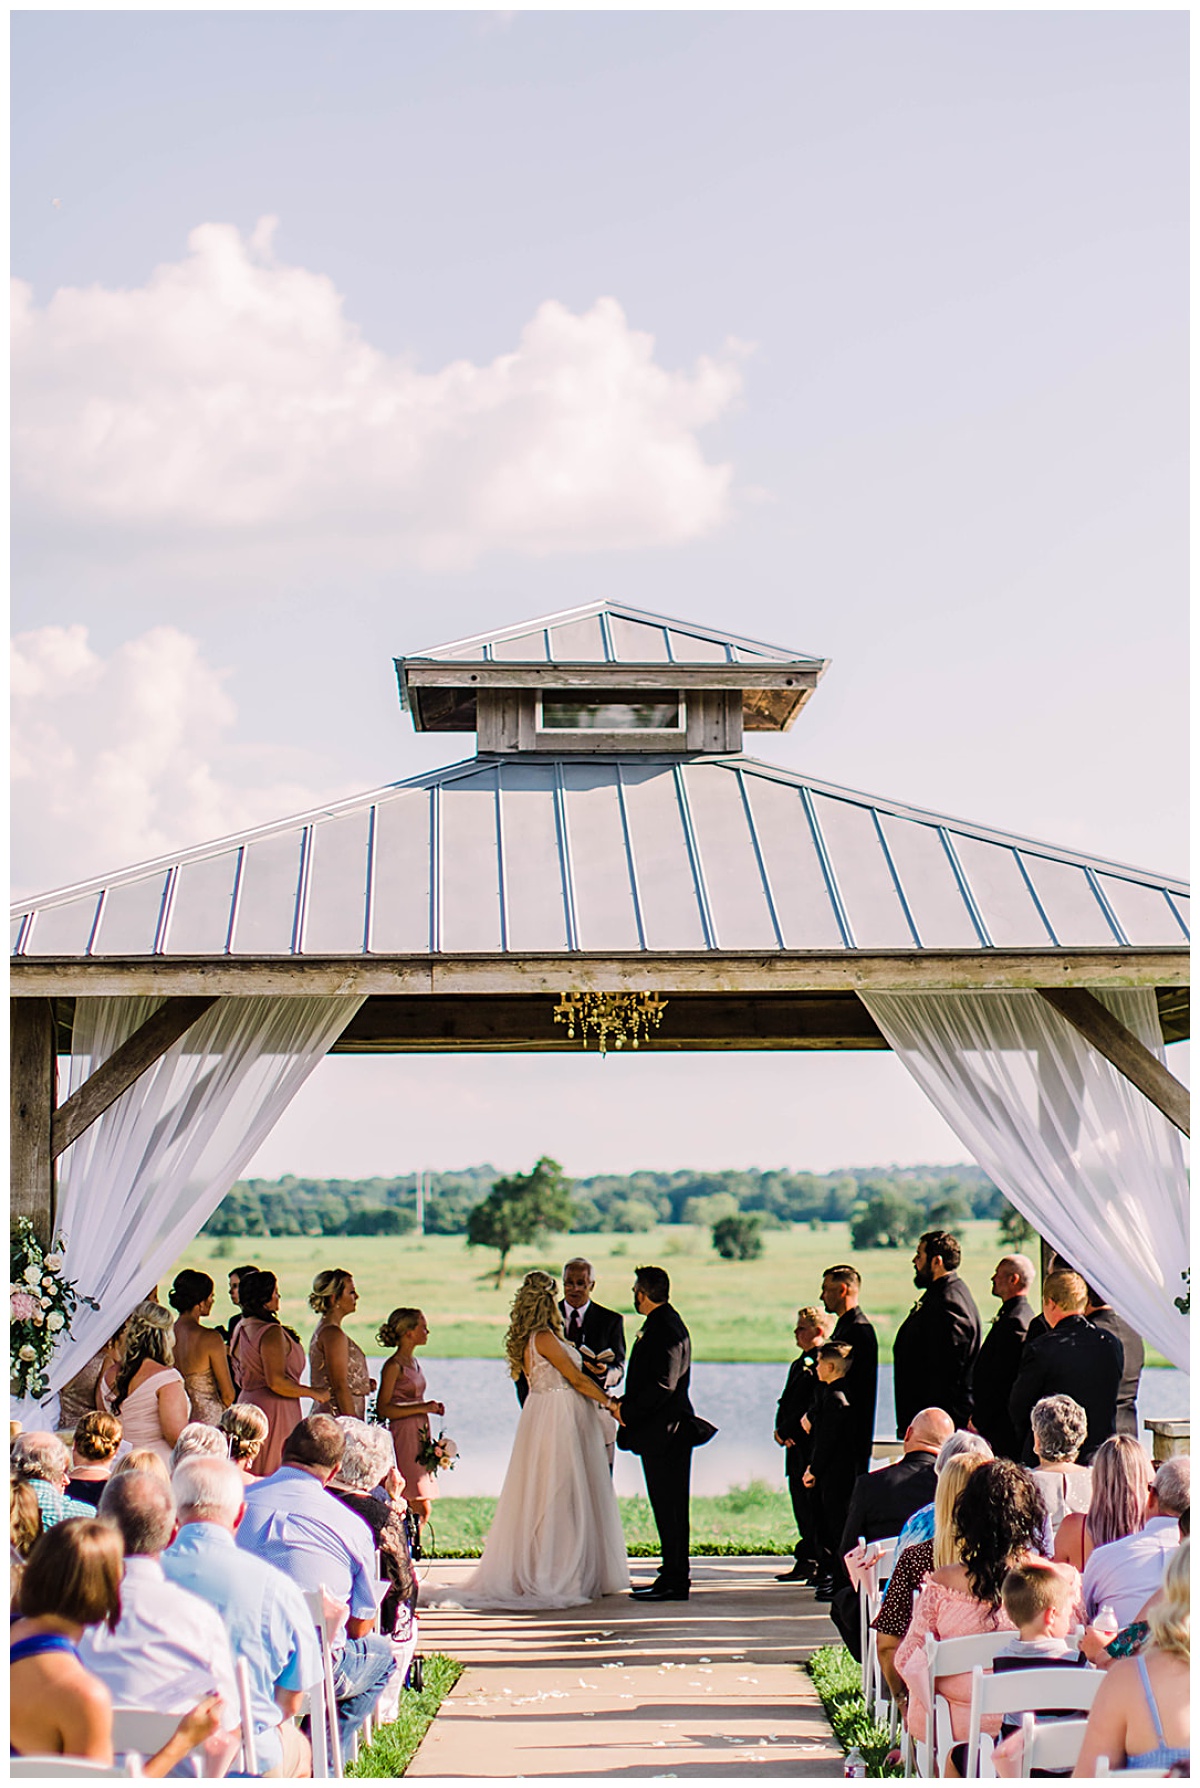 Ceremony at Texas wedding venue | Emery's Buffalo Creek 